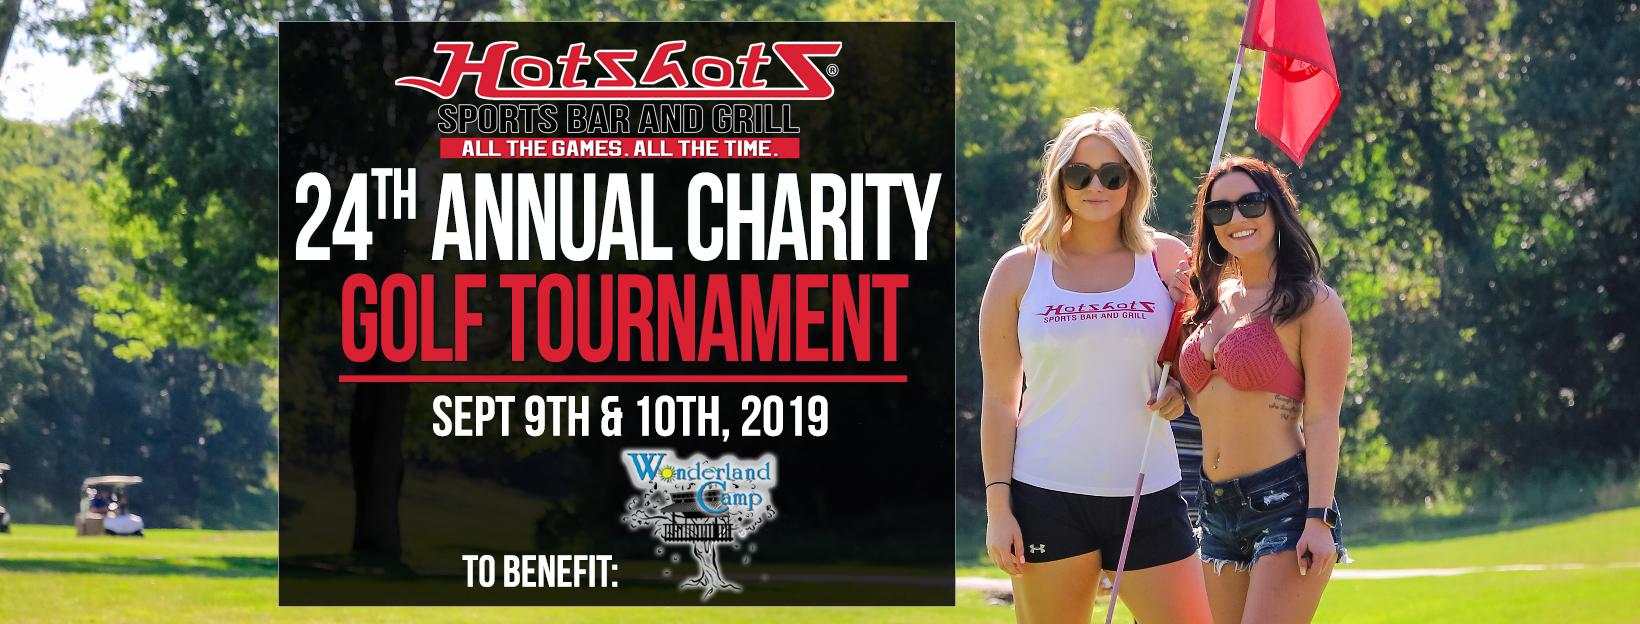 2019 Hotshots Sports Bar & Grill Charity Golf Tournament - MONDAY